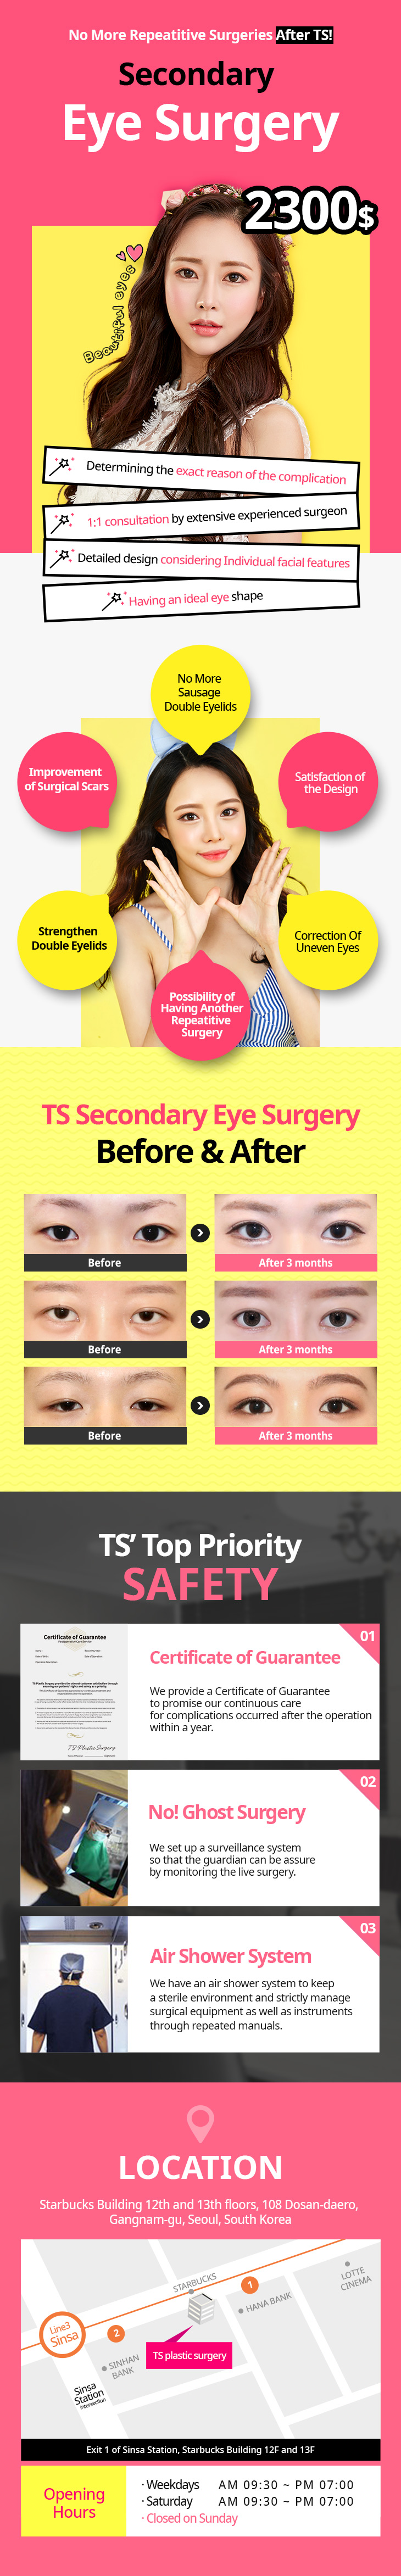 Secondary Eye Surgery